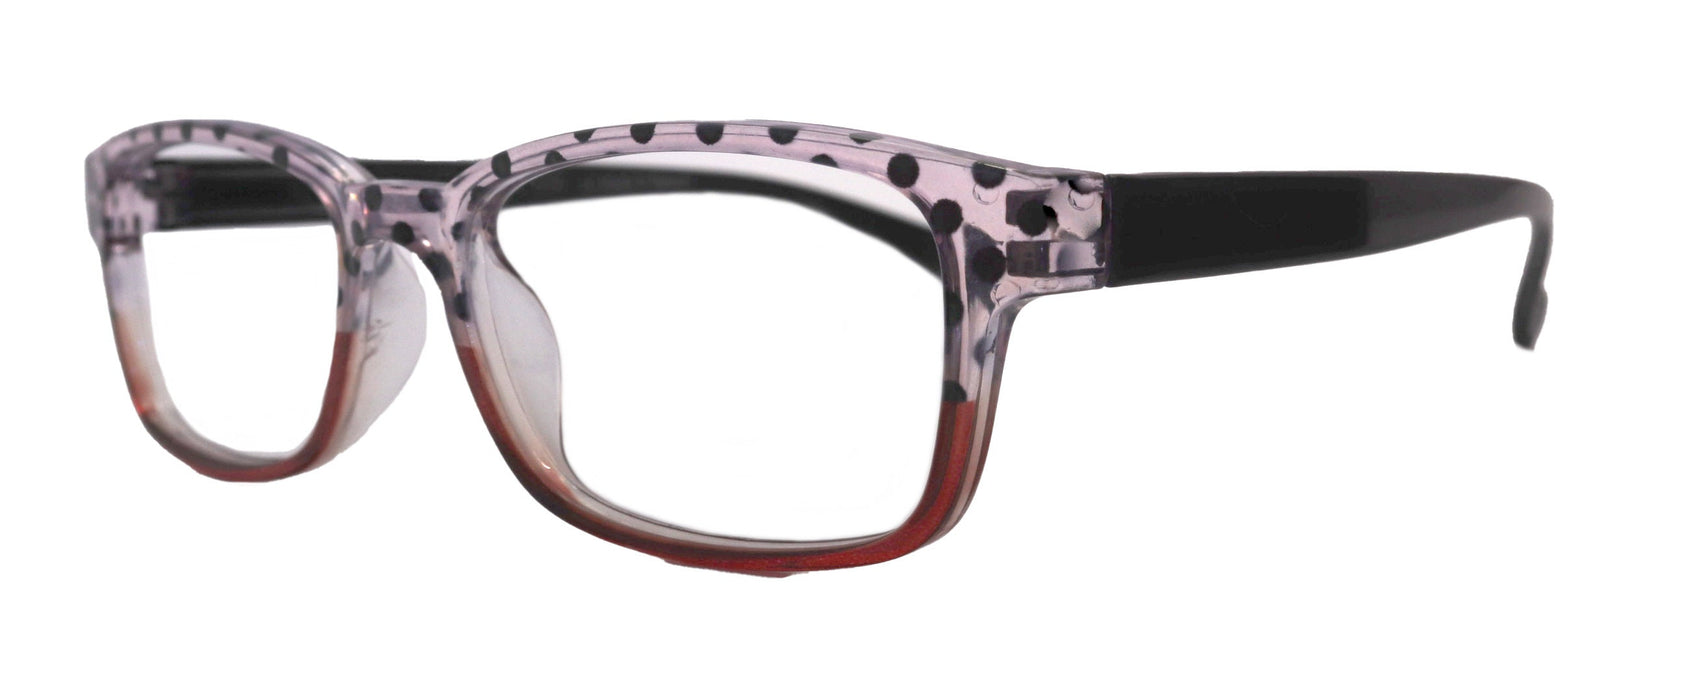 Julia, Premium Reading Glasses High End Reading Glass +.50 to +6 magnifying glasses (Pink Polka Dot) (Rectangular) optical Frames